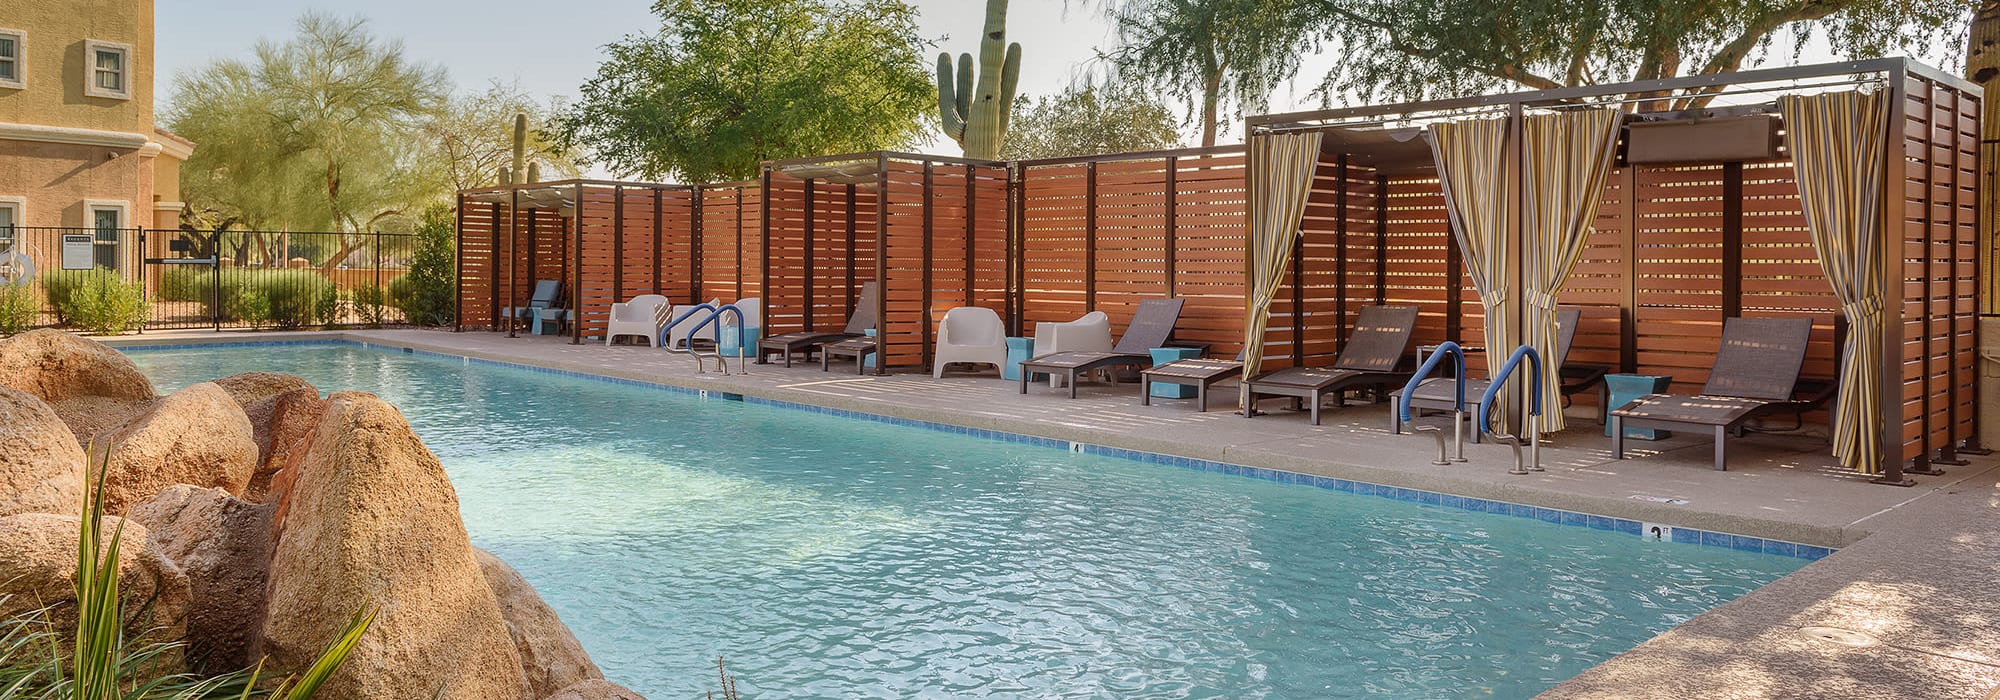 Resort-style pool at The Regents at Scottsdale in Scottsdale, Arizona